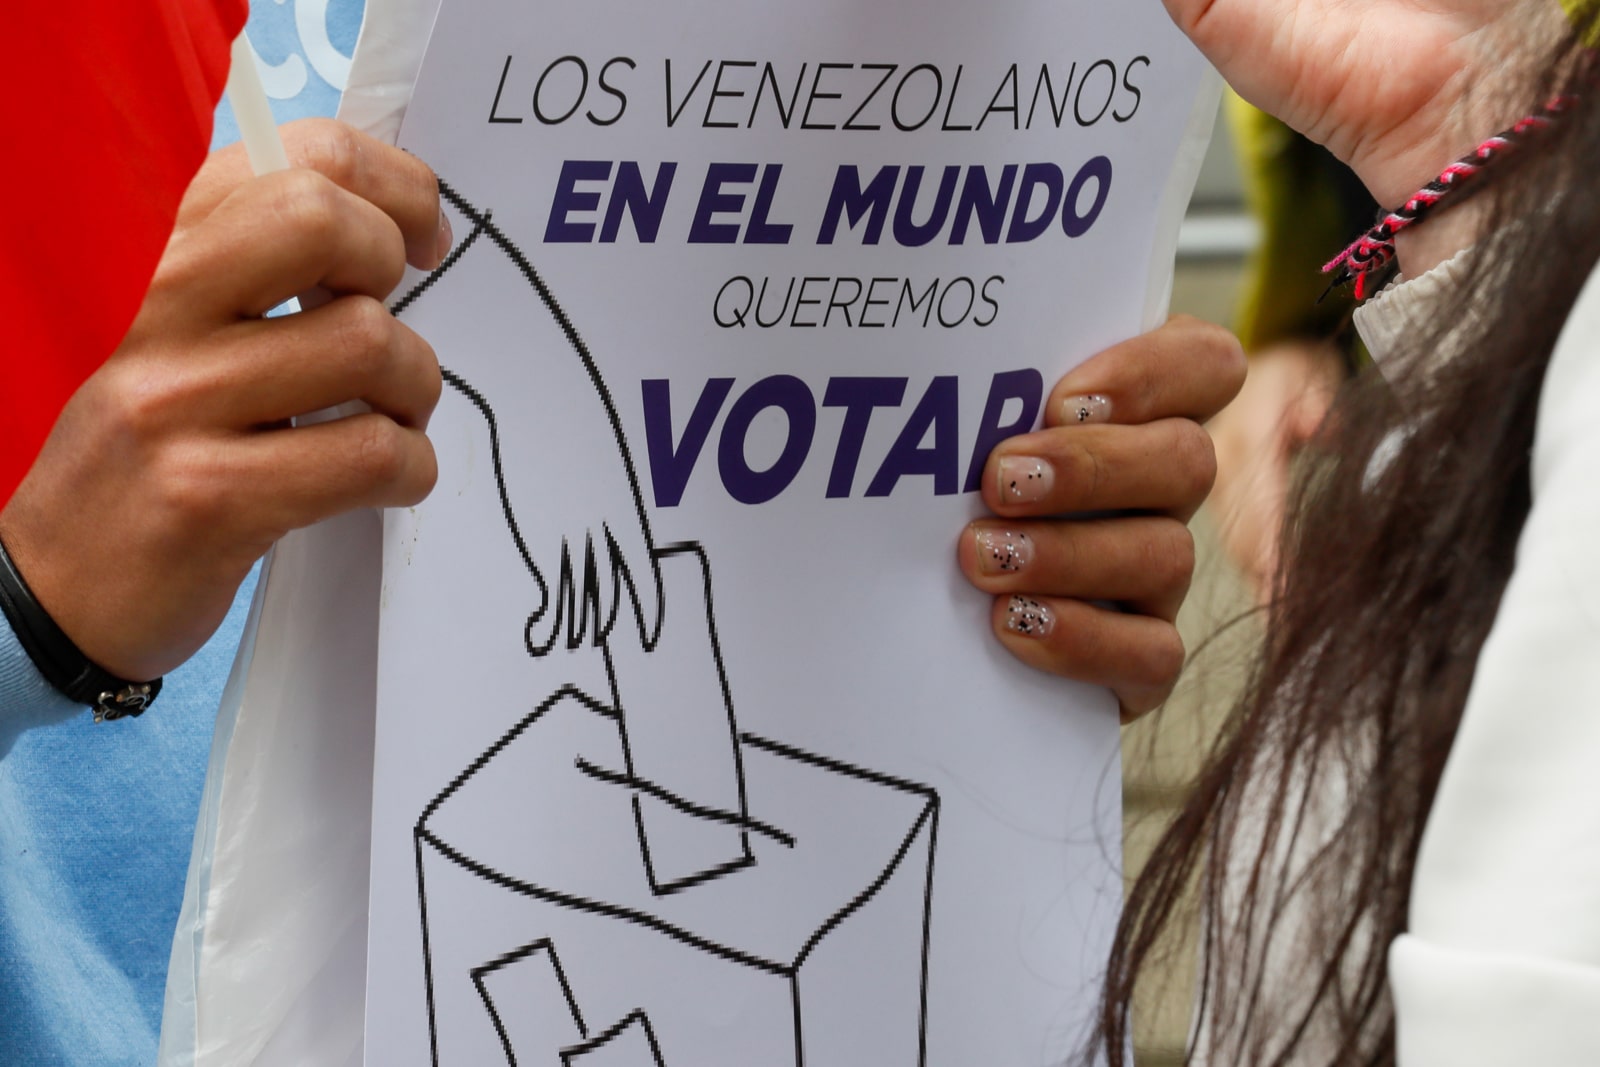 Venezolanos en Colombia denuncian impedimentos para inscribirse como votantes impedimentos para inscribirse como votantes para las elecciones del 28 de abril